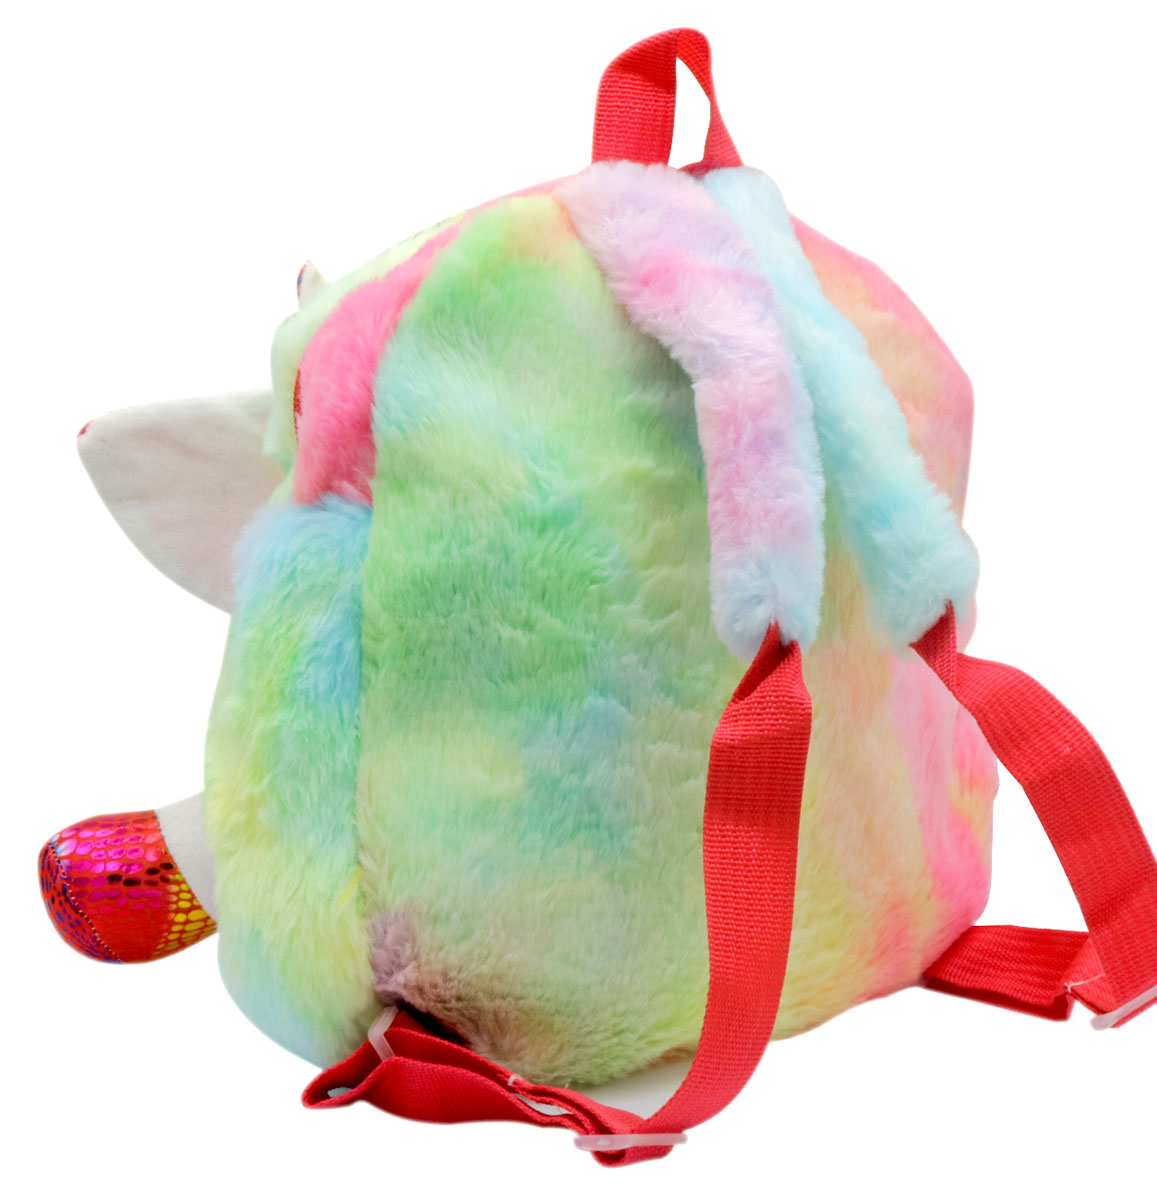 Y-C5.4 BAG601-001 Plush Backpack Unicorn 31x25cm - Mixed Colors - 1pc